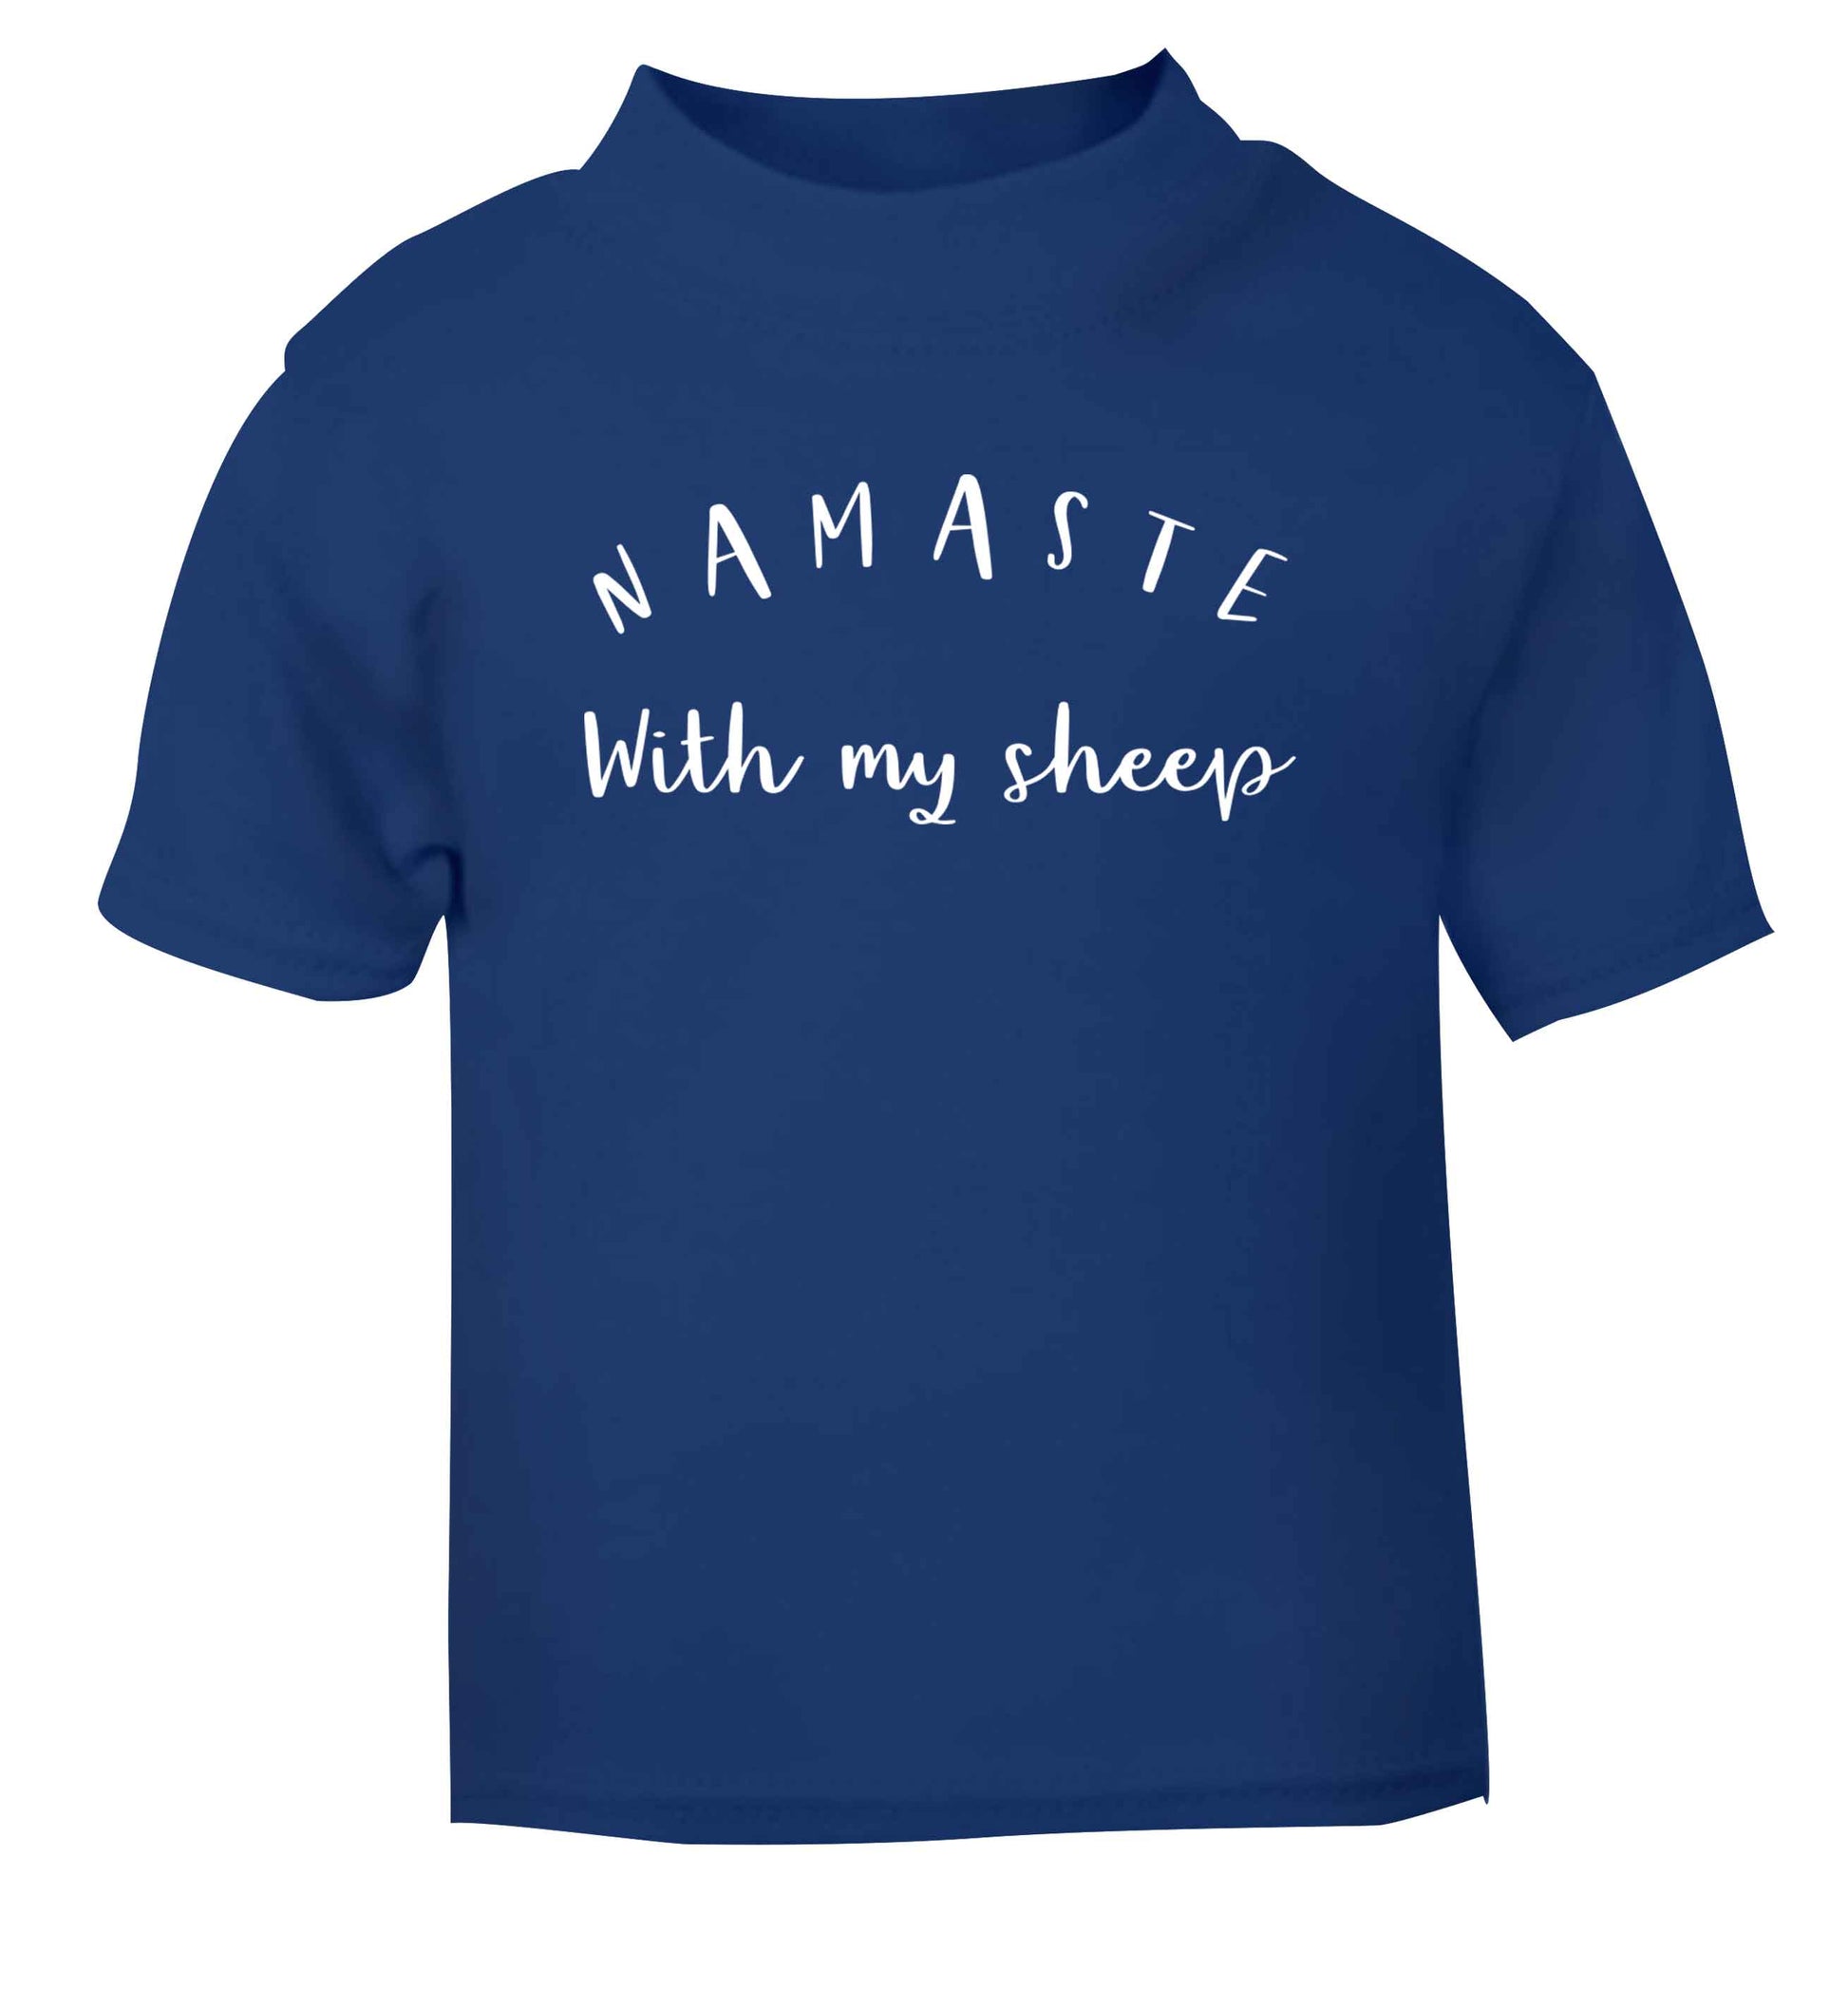 Namaste with my sheep blue Baby Toddler Tshirt 2 Years